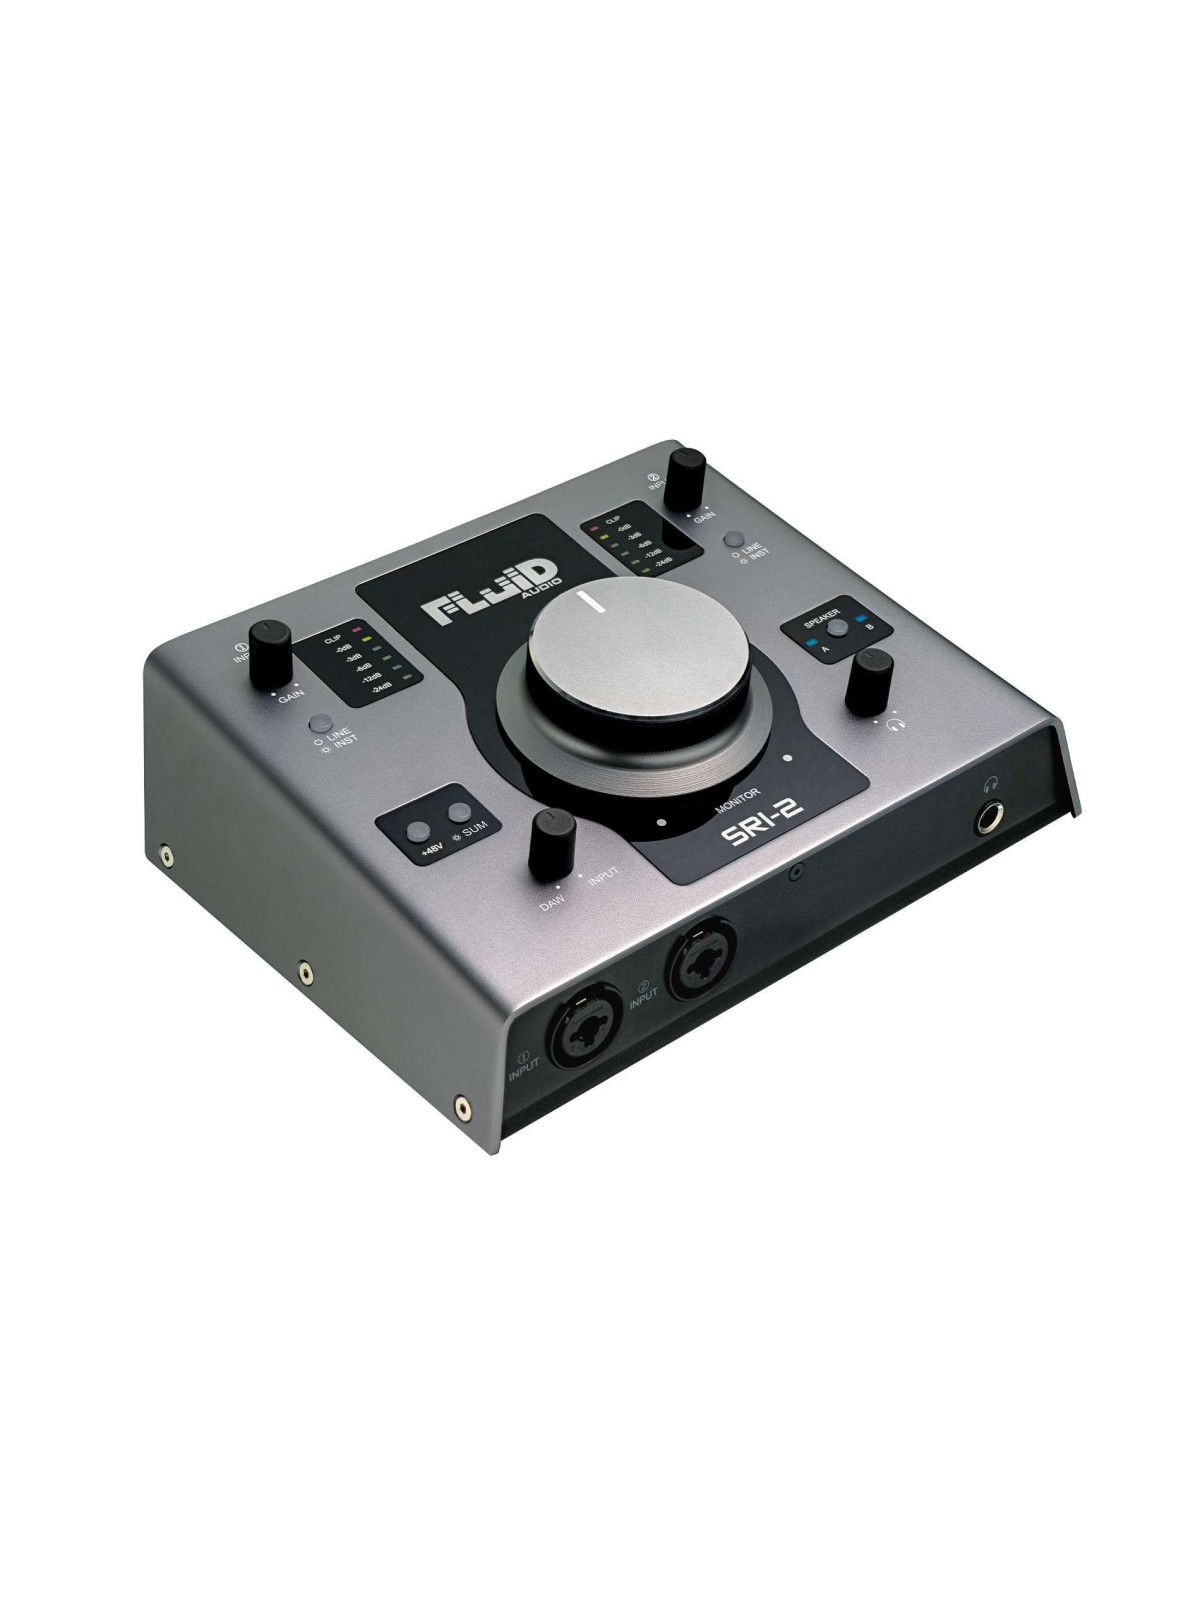 Fluid Audio SRI-2 Interface Audio